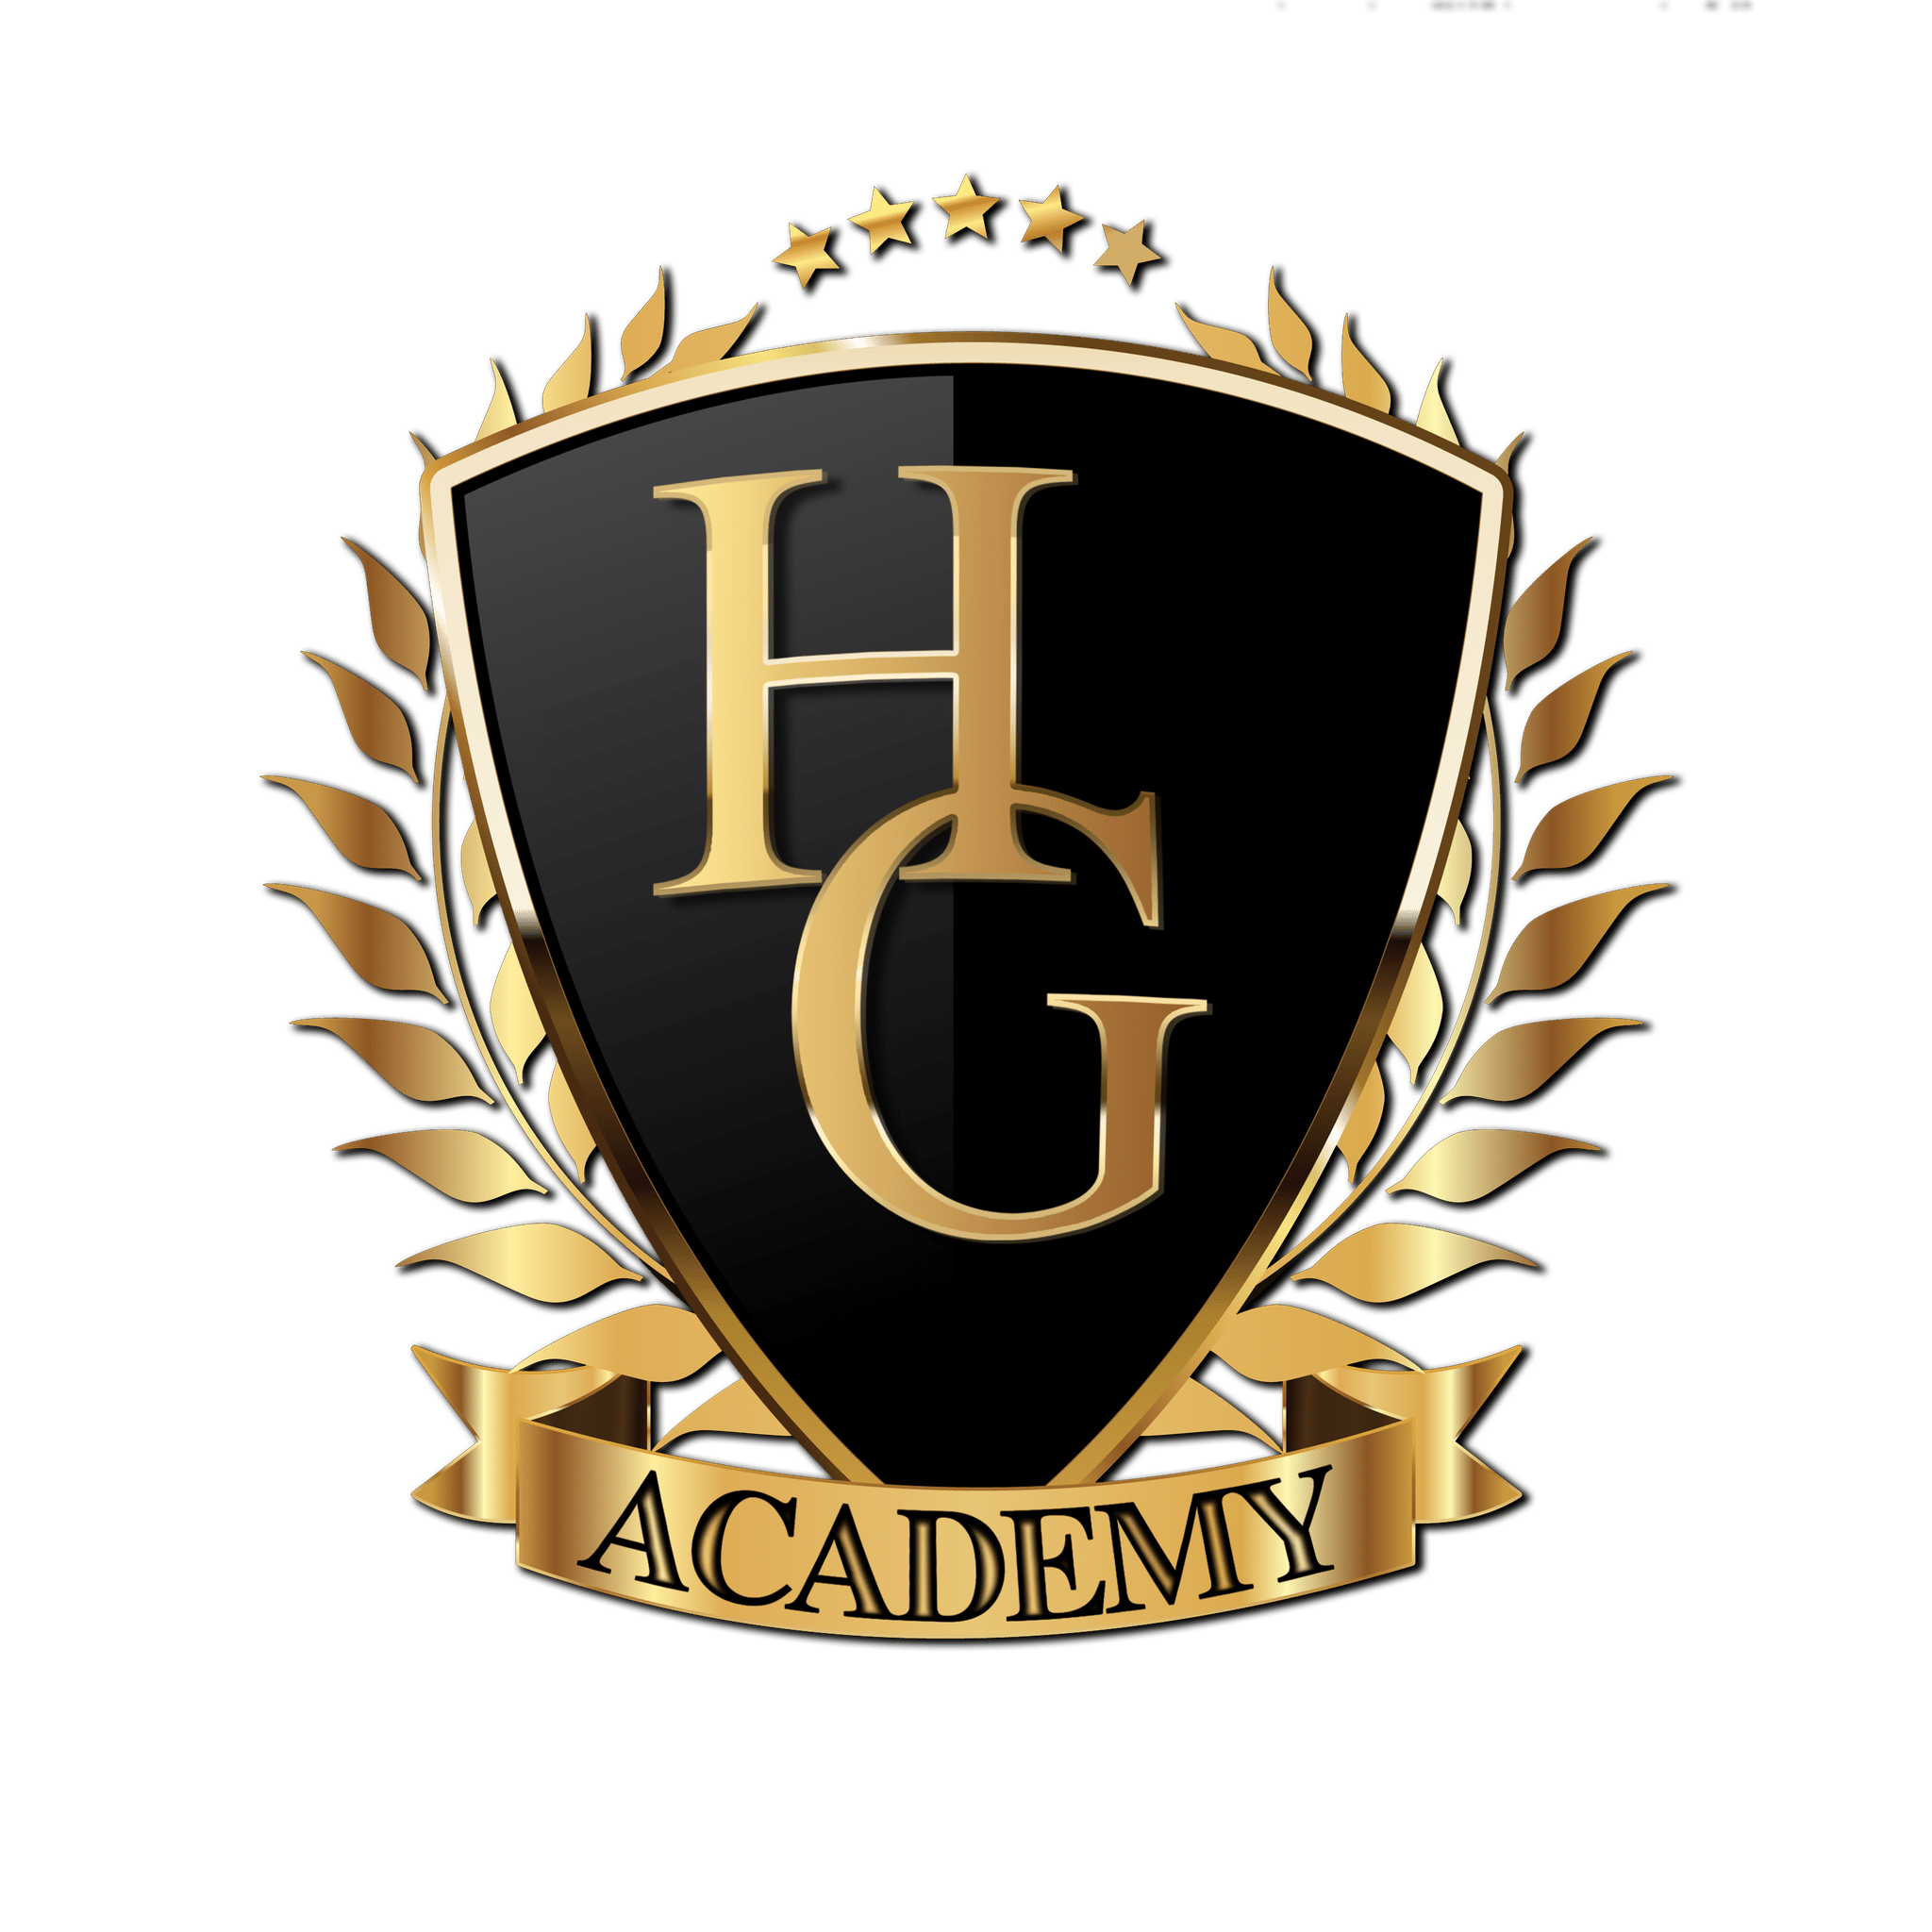 The HG Academy Brand Logo 